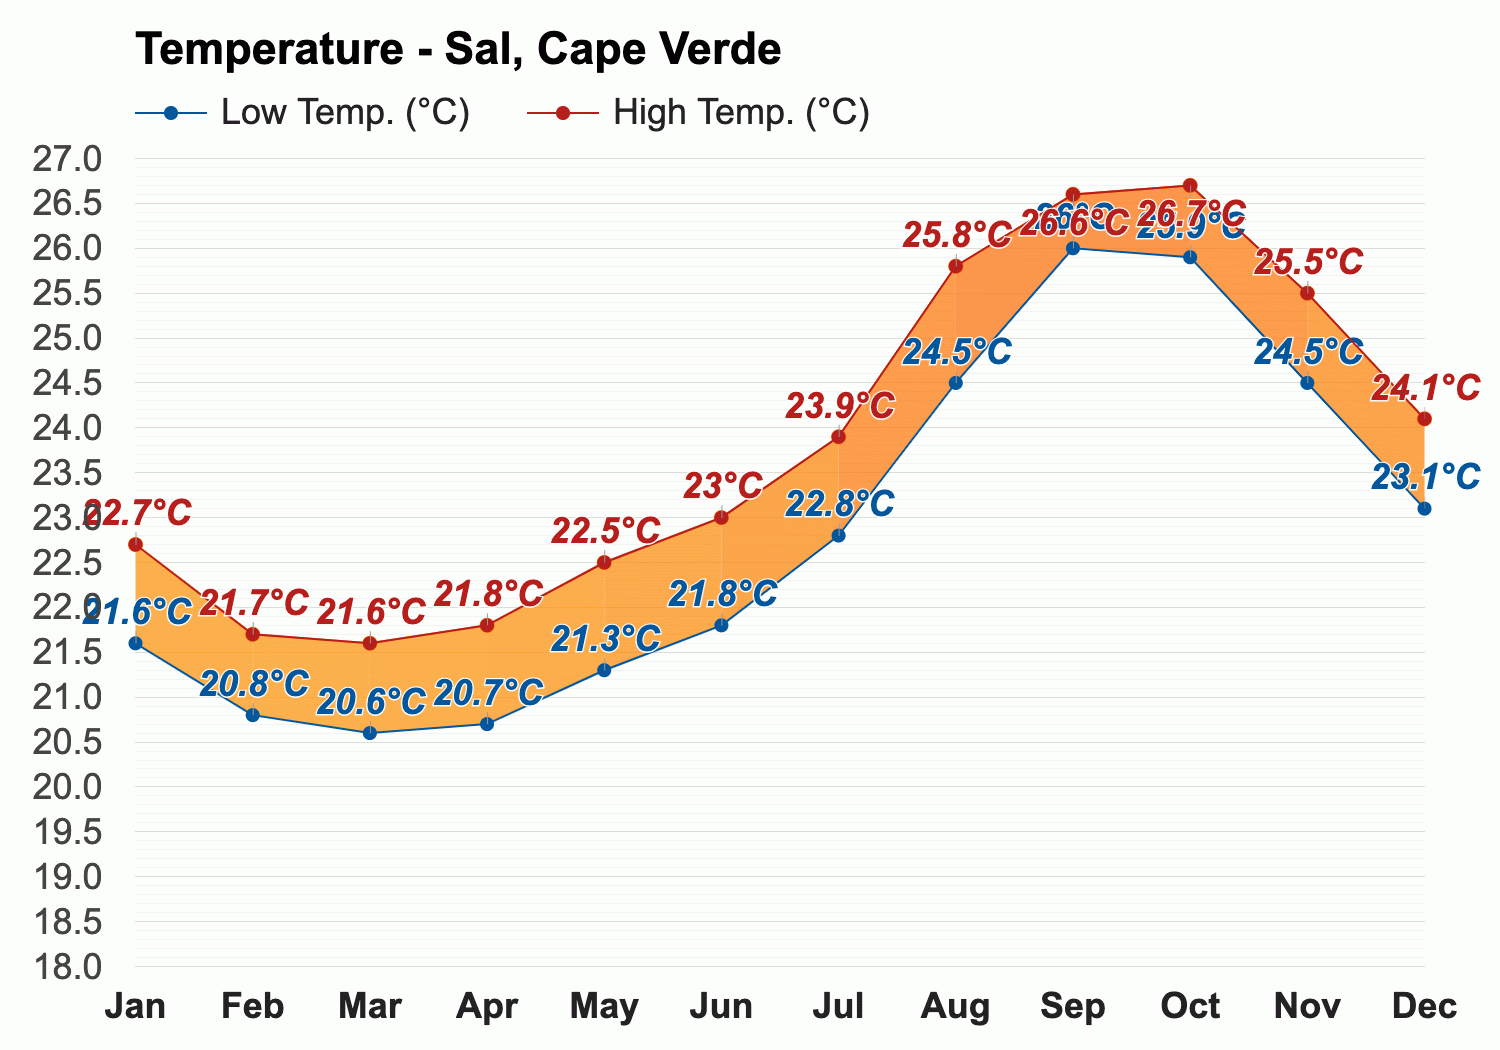 February Weather forecast - Winter forecast - Sal, Cape Verde